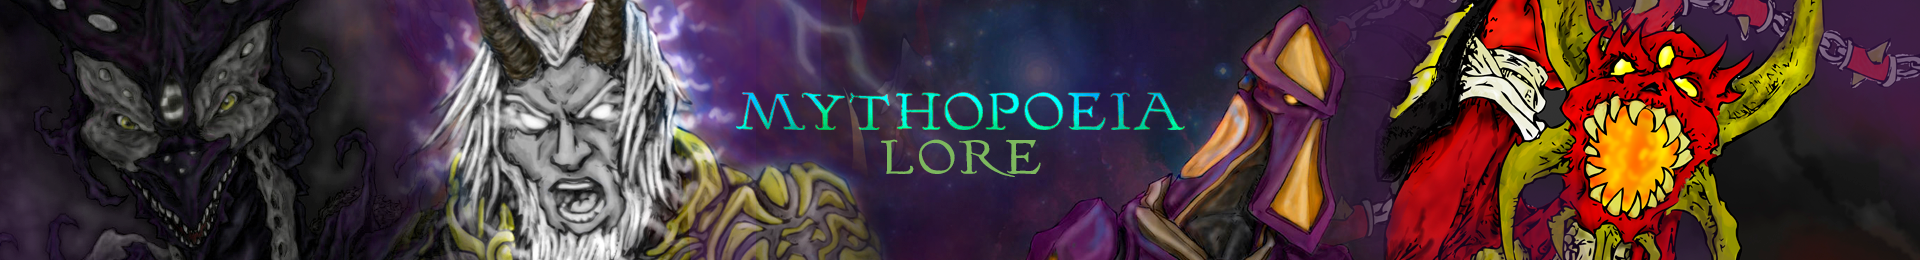 mythopoeia: Lore banner